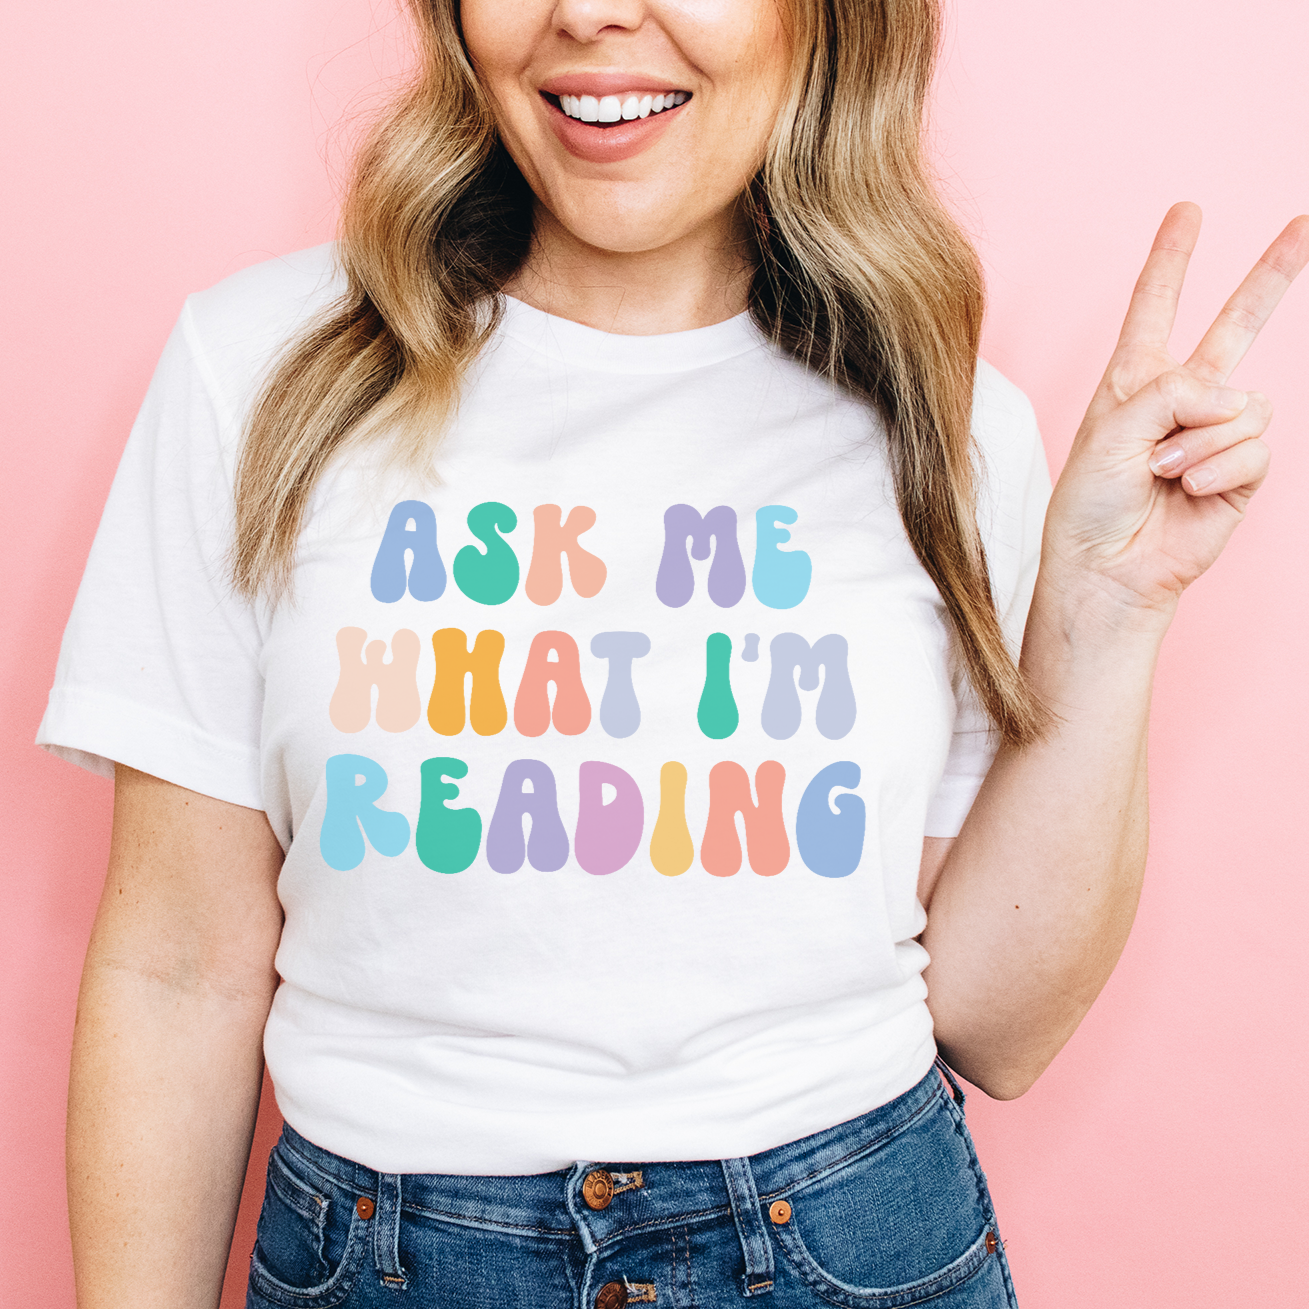 Ask Me What I'm Reading T-Shirt - Retro Letters, Bookworm Shirt